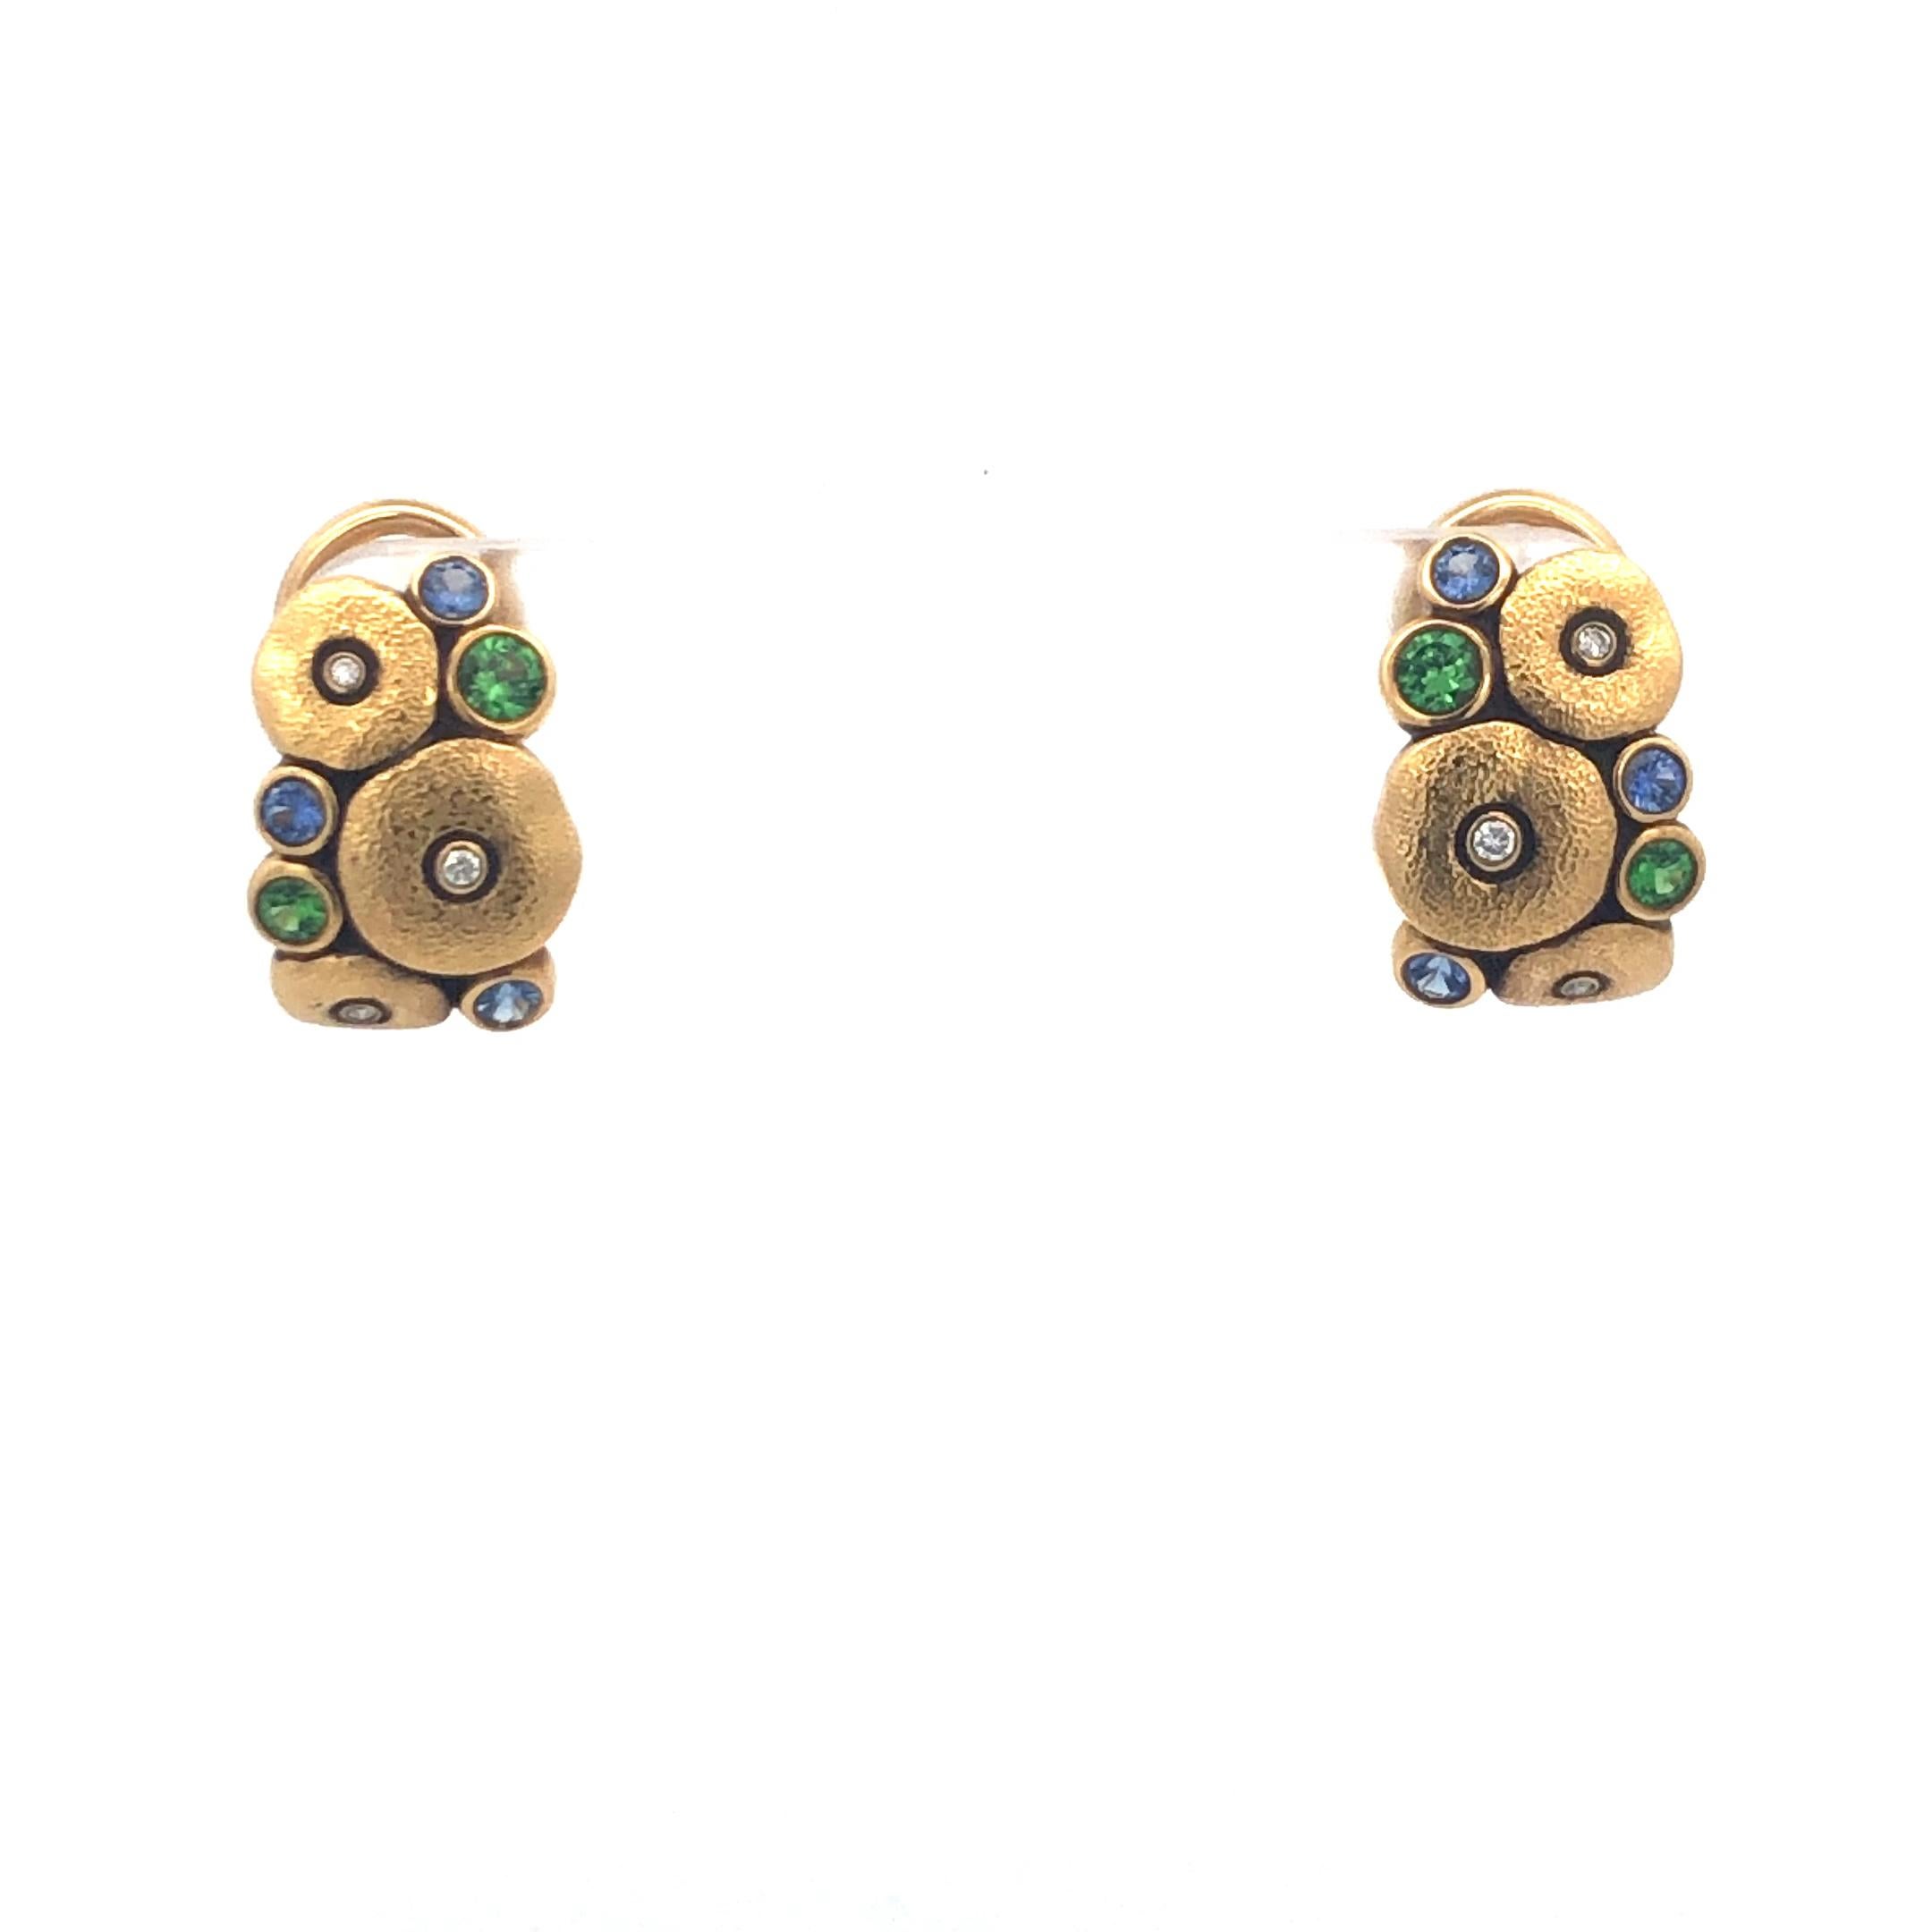 Alex Sepkus Orchard Earrings, 6 Sapphires 4 Tsavorites With 0.60Ctw, 6 Diamonds 0.04Ctw, 18K Yellow Gold.
Details: 7.8 Grams
.5